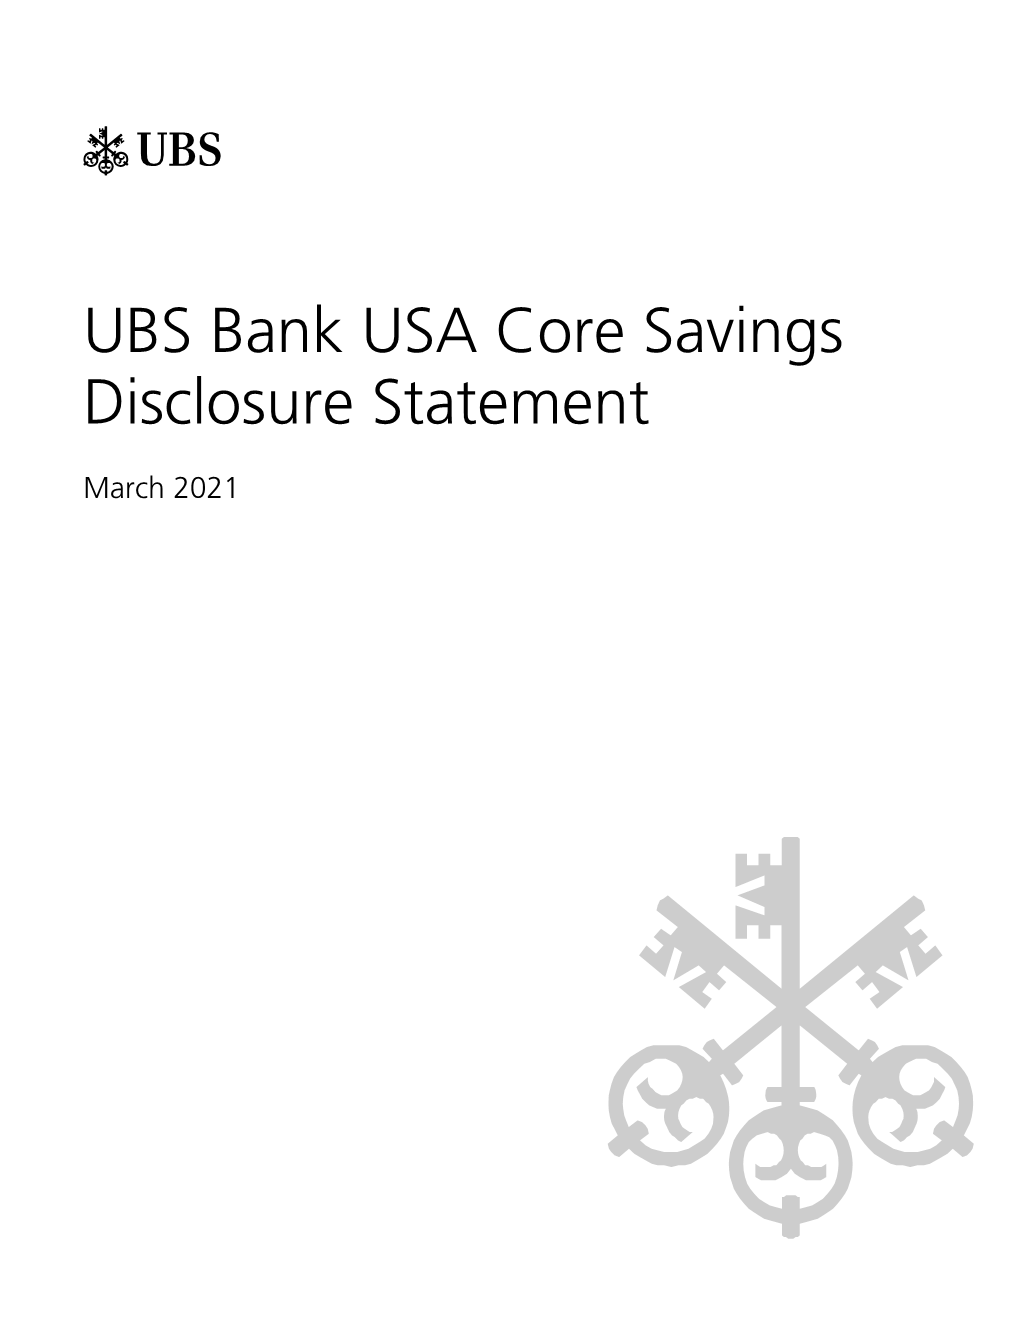 UBS Bank USA Core Savings Disclosure Statement